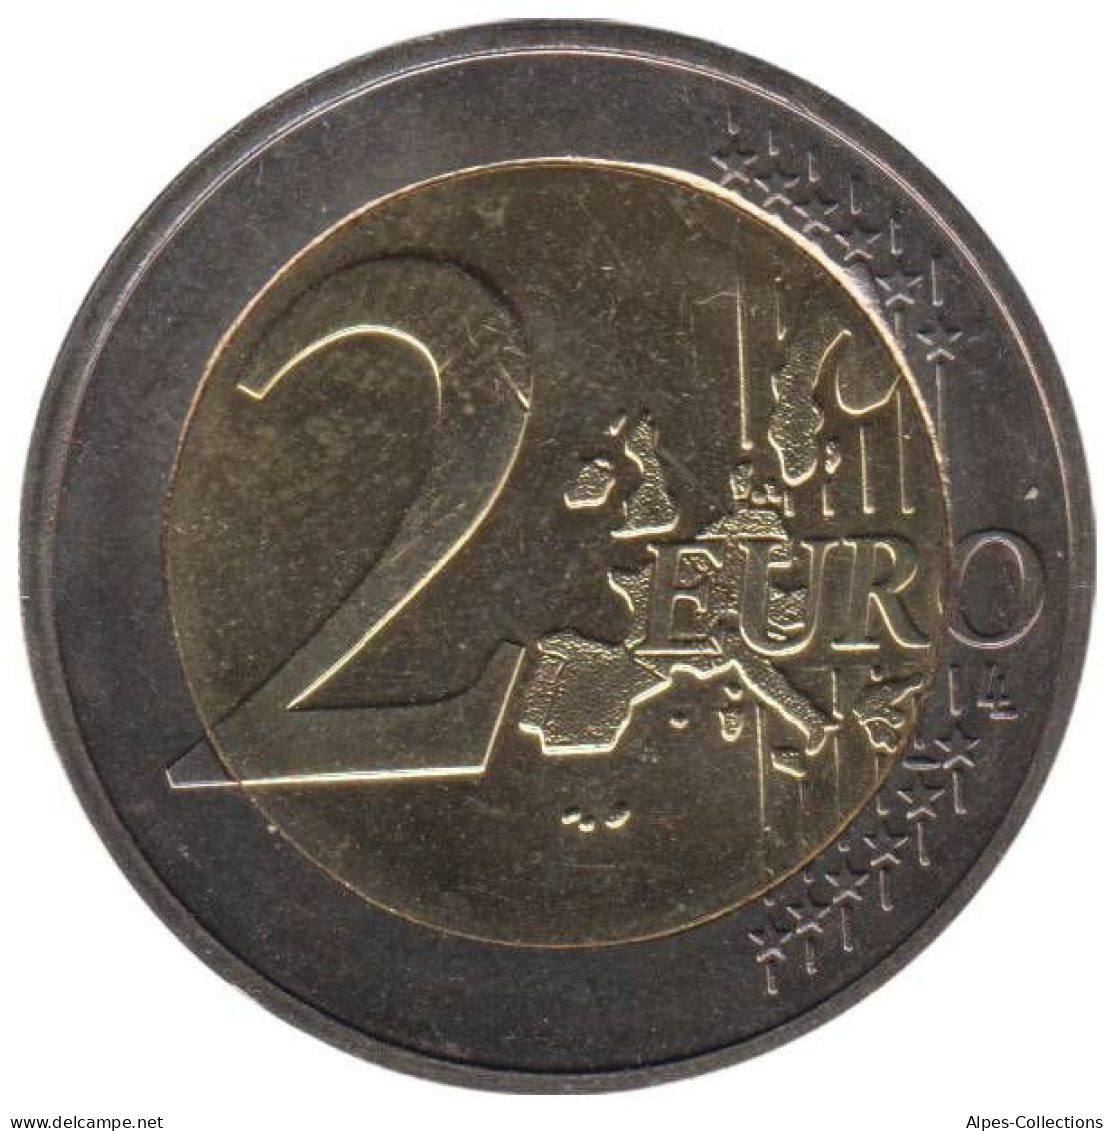 LU20003.1 - LUXEMBOURG - 2 Euros - 2003 - Luxemburgo